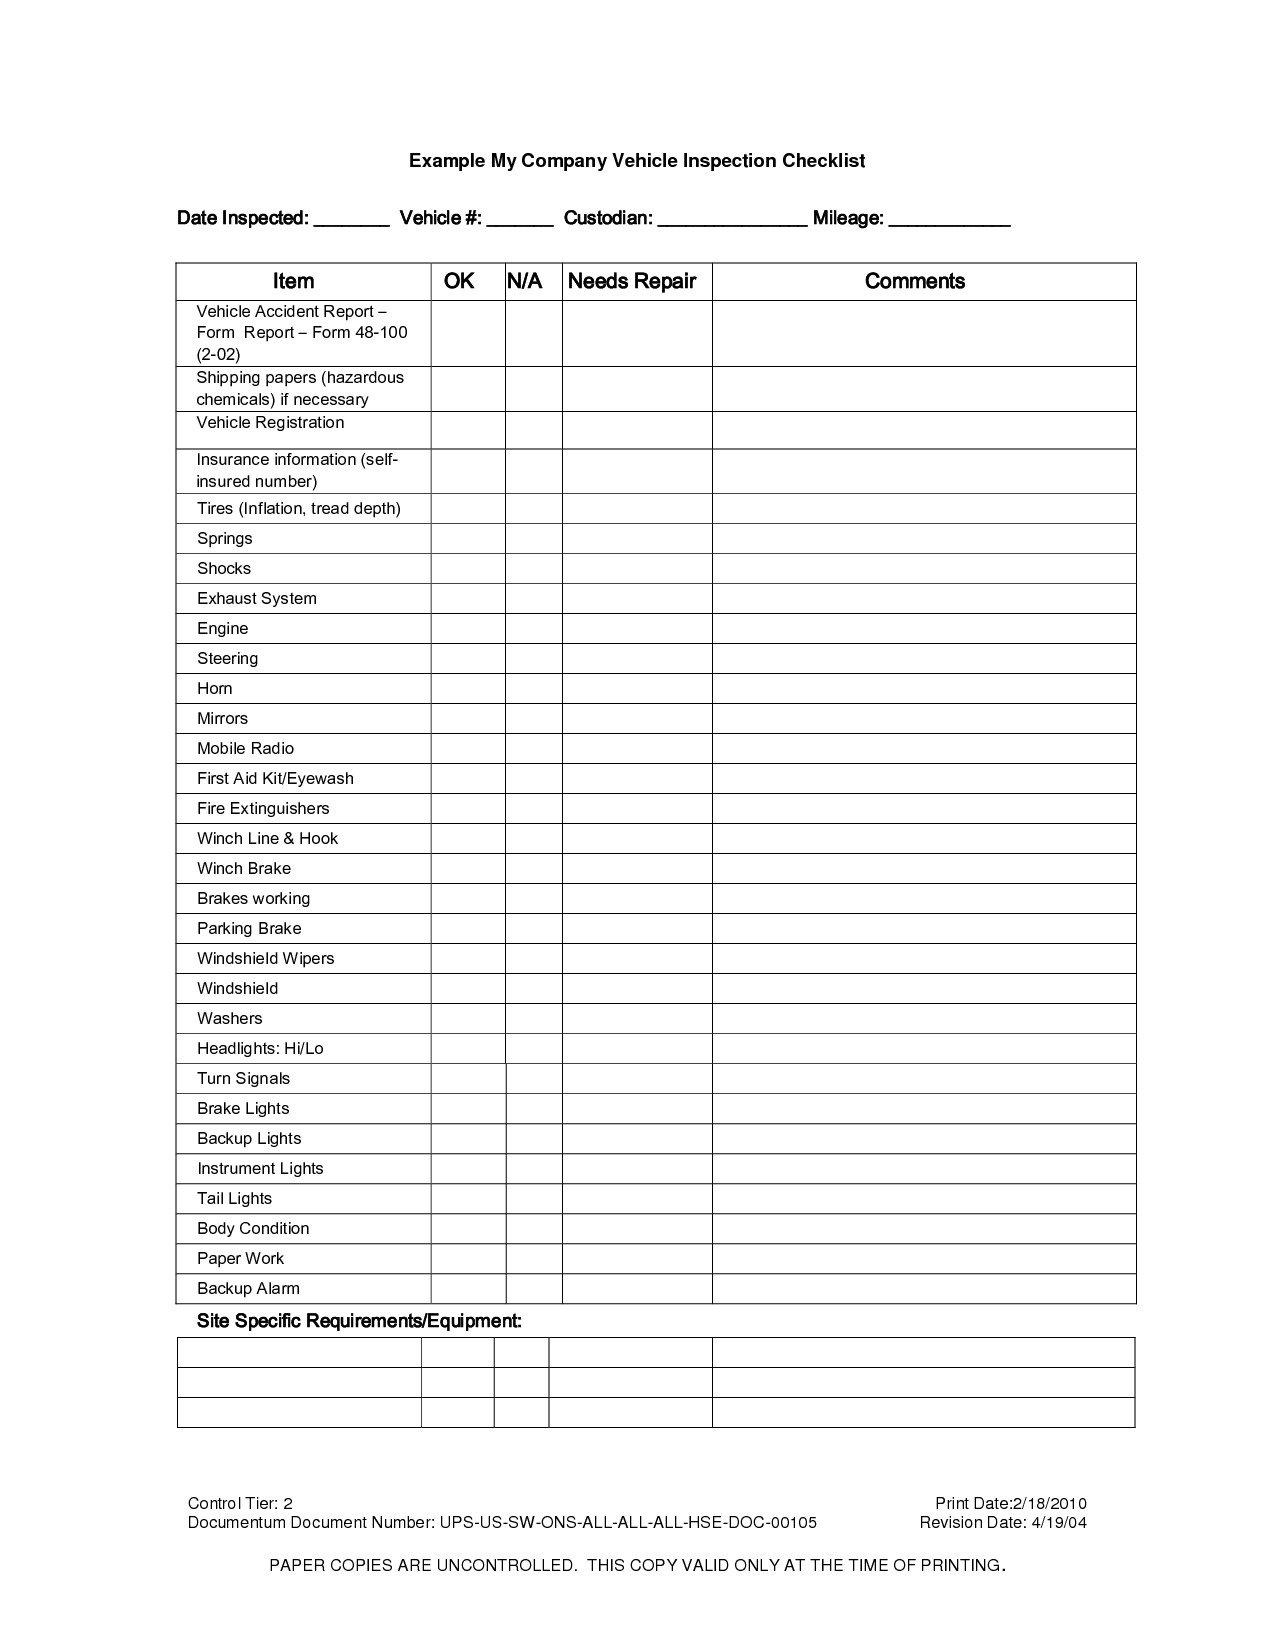 Inspection Log Sheet Vehicle Inspection Checklist Template